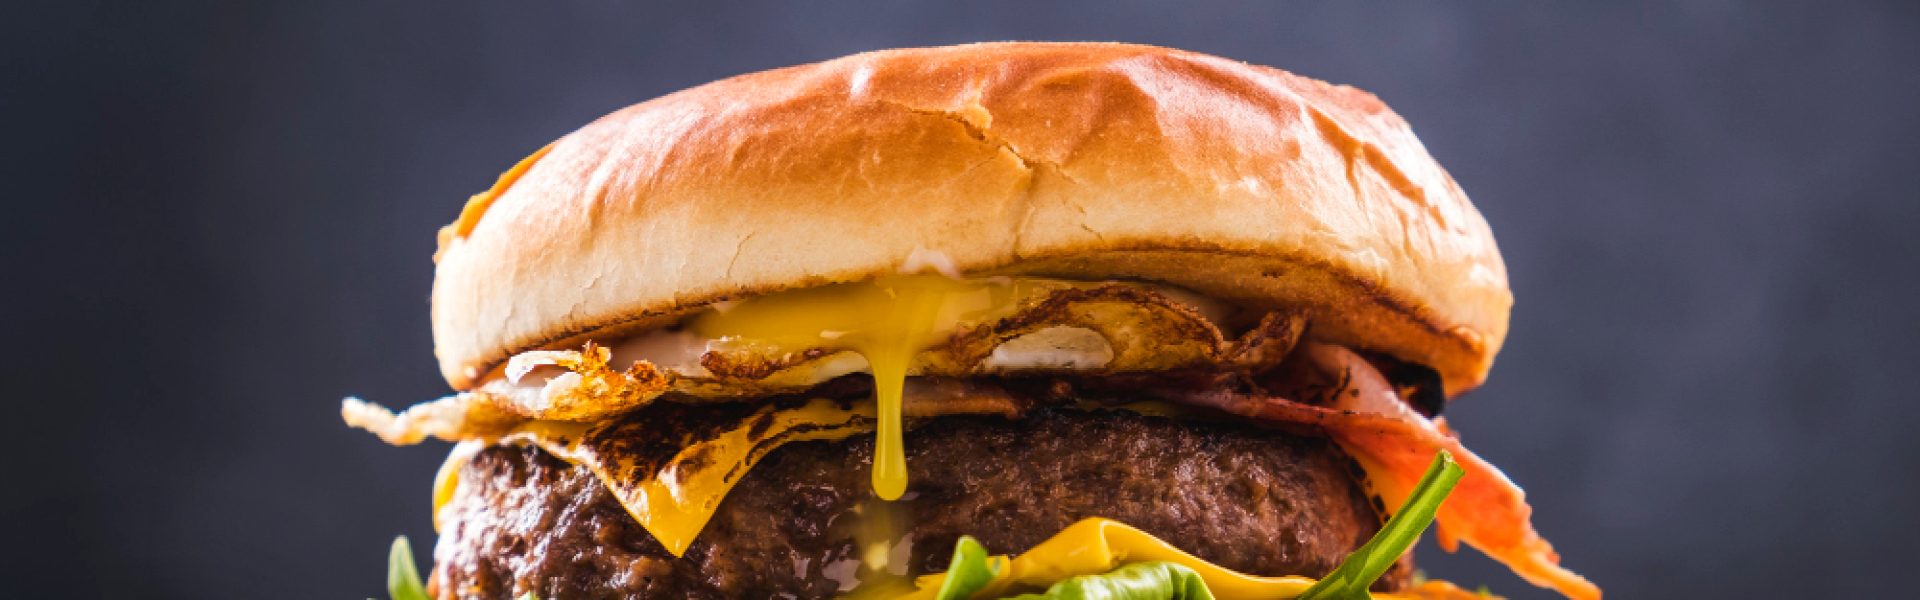 homemade-beef-burger-delicious-fastfood-closeup